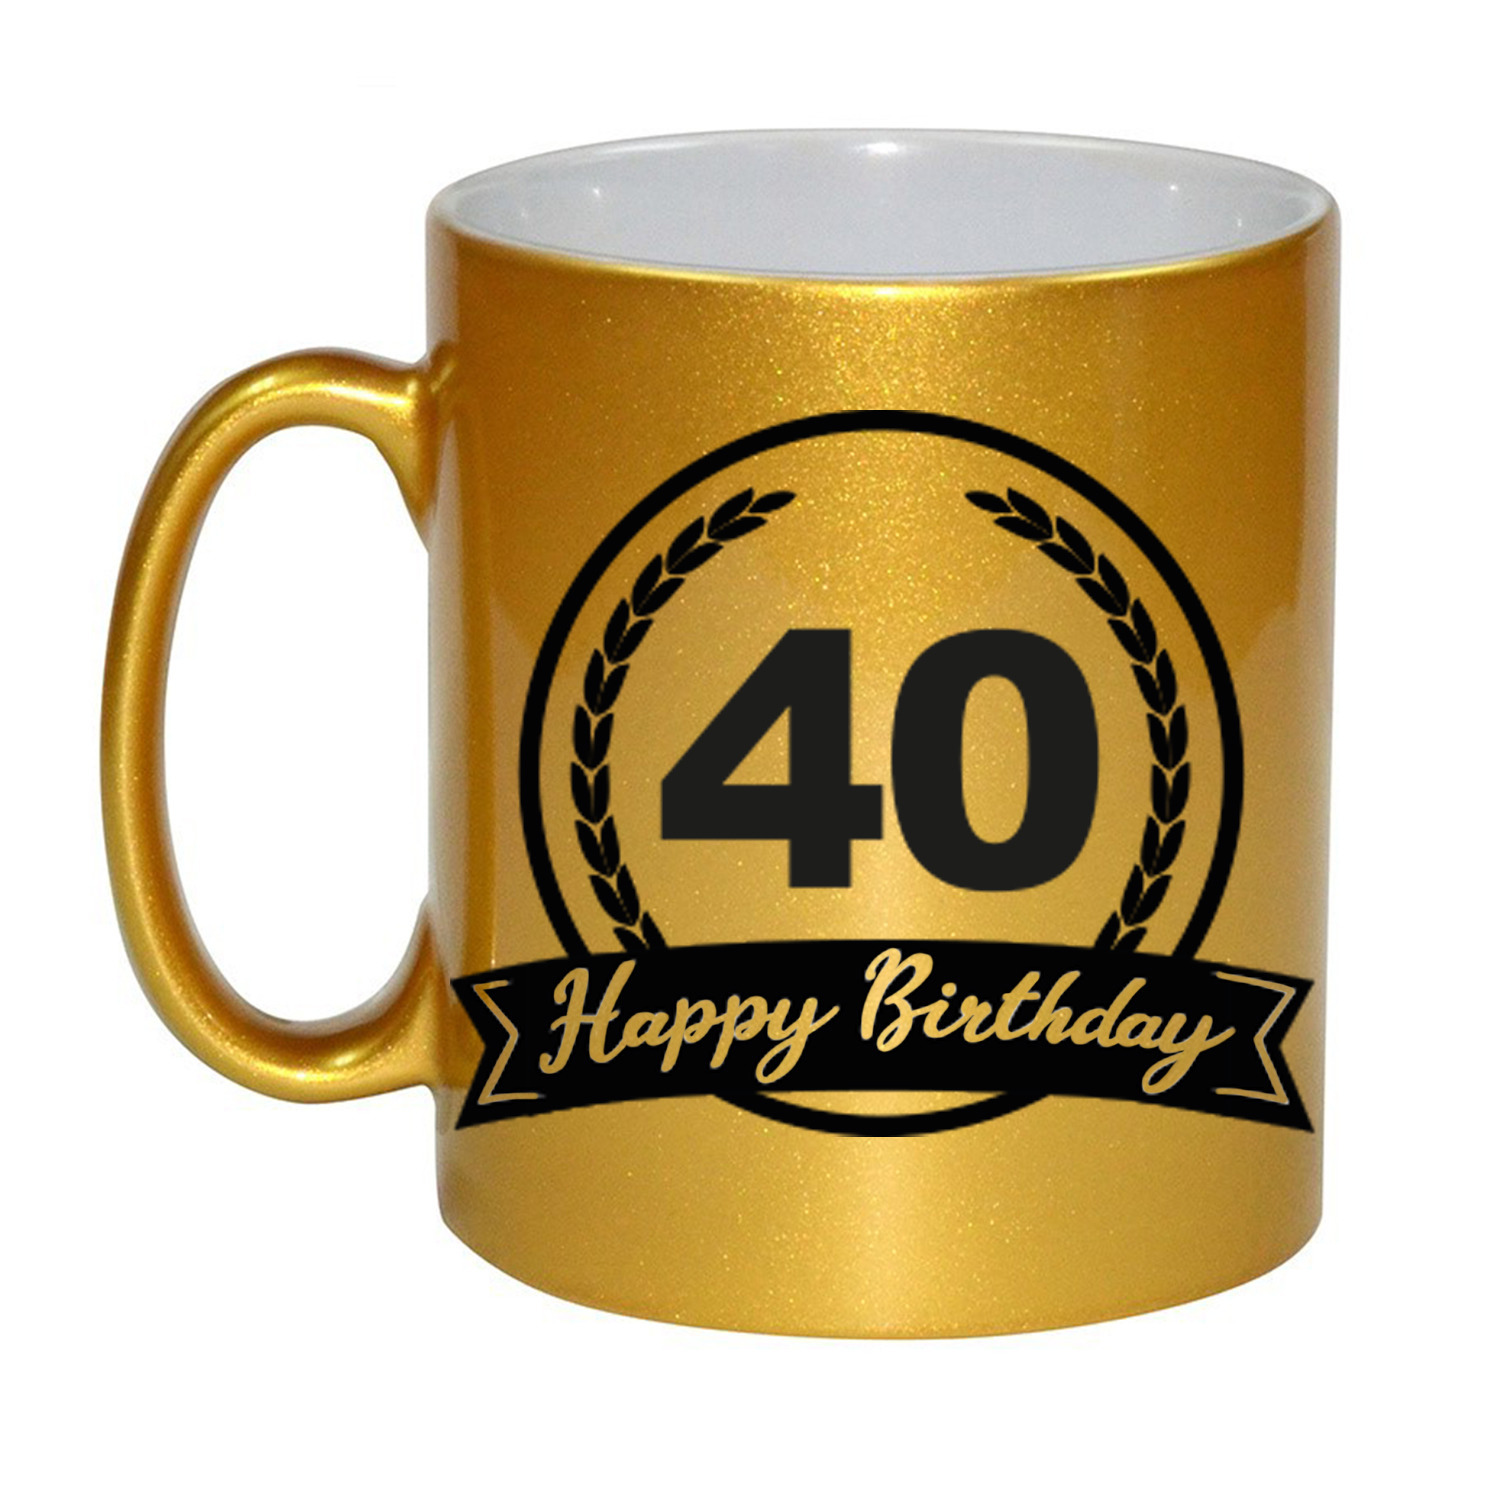 Happy Birthday 40 years gouden cadeau mok-beker met wimpel 330 ml